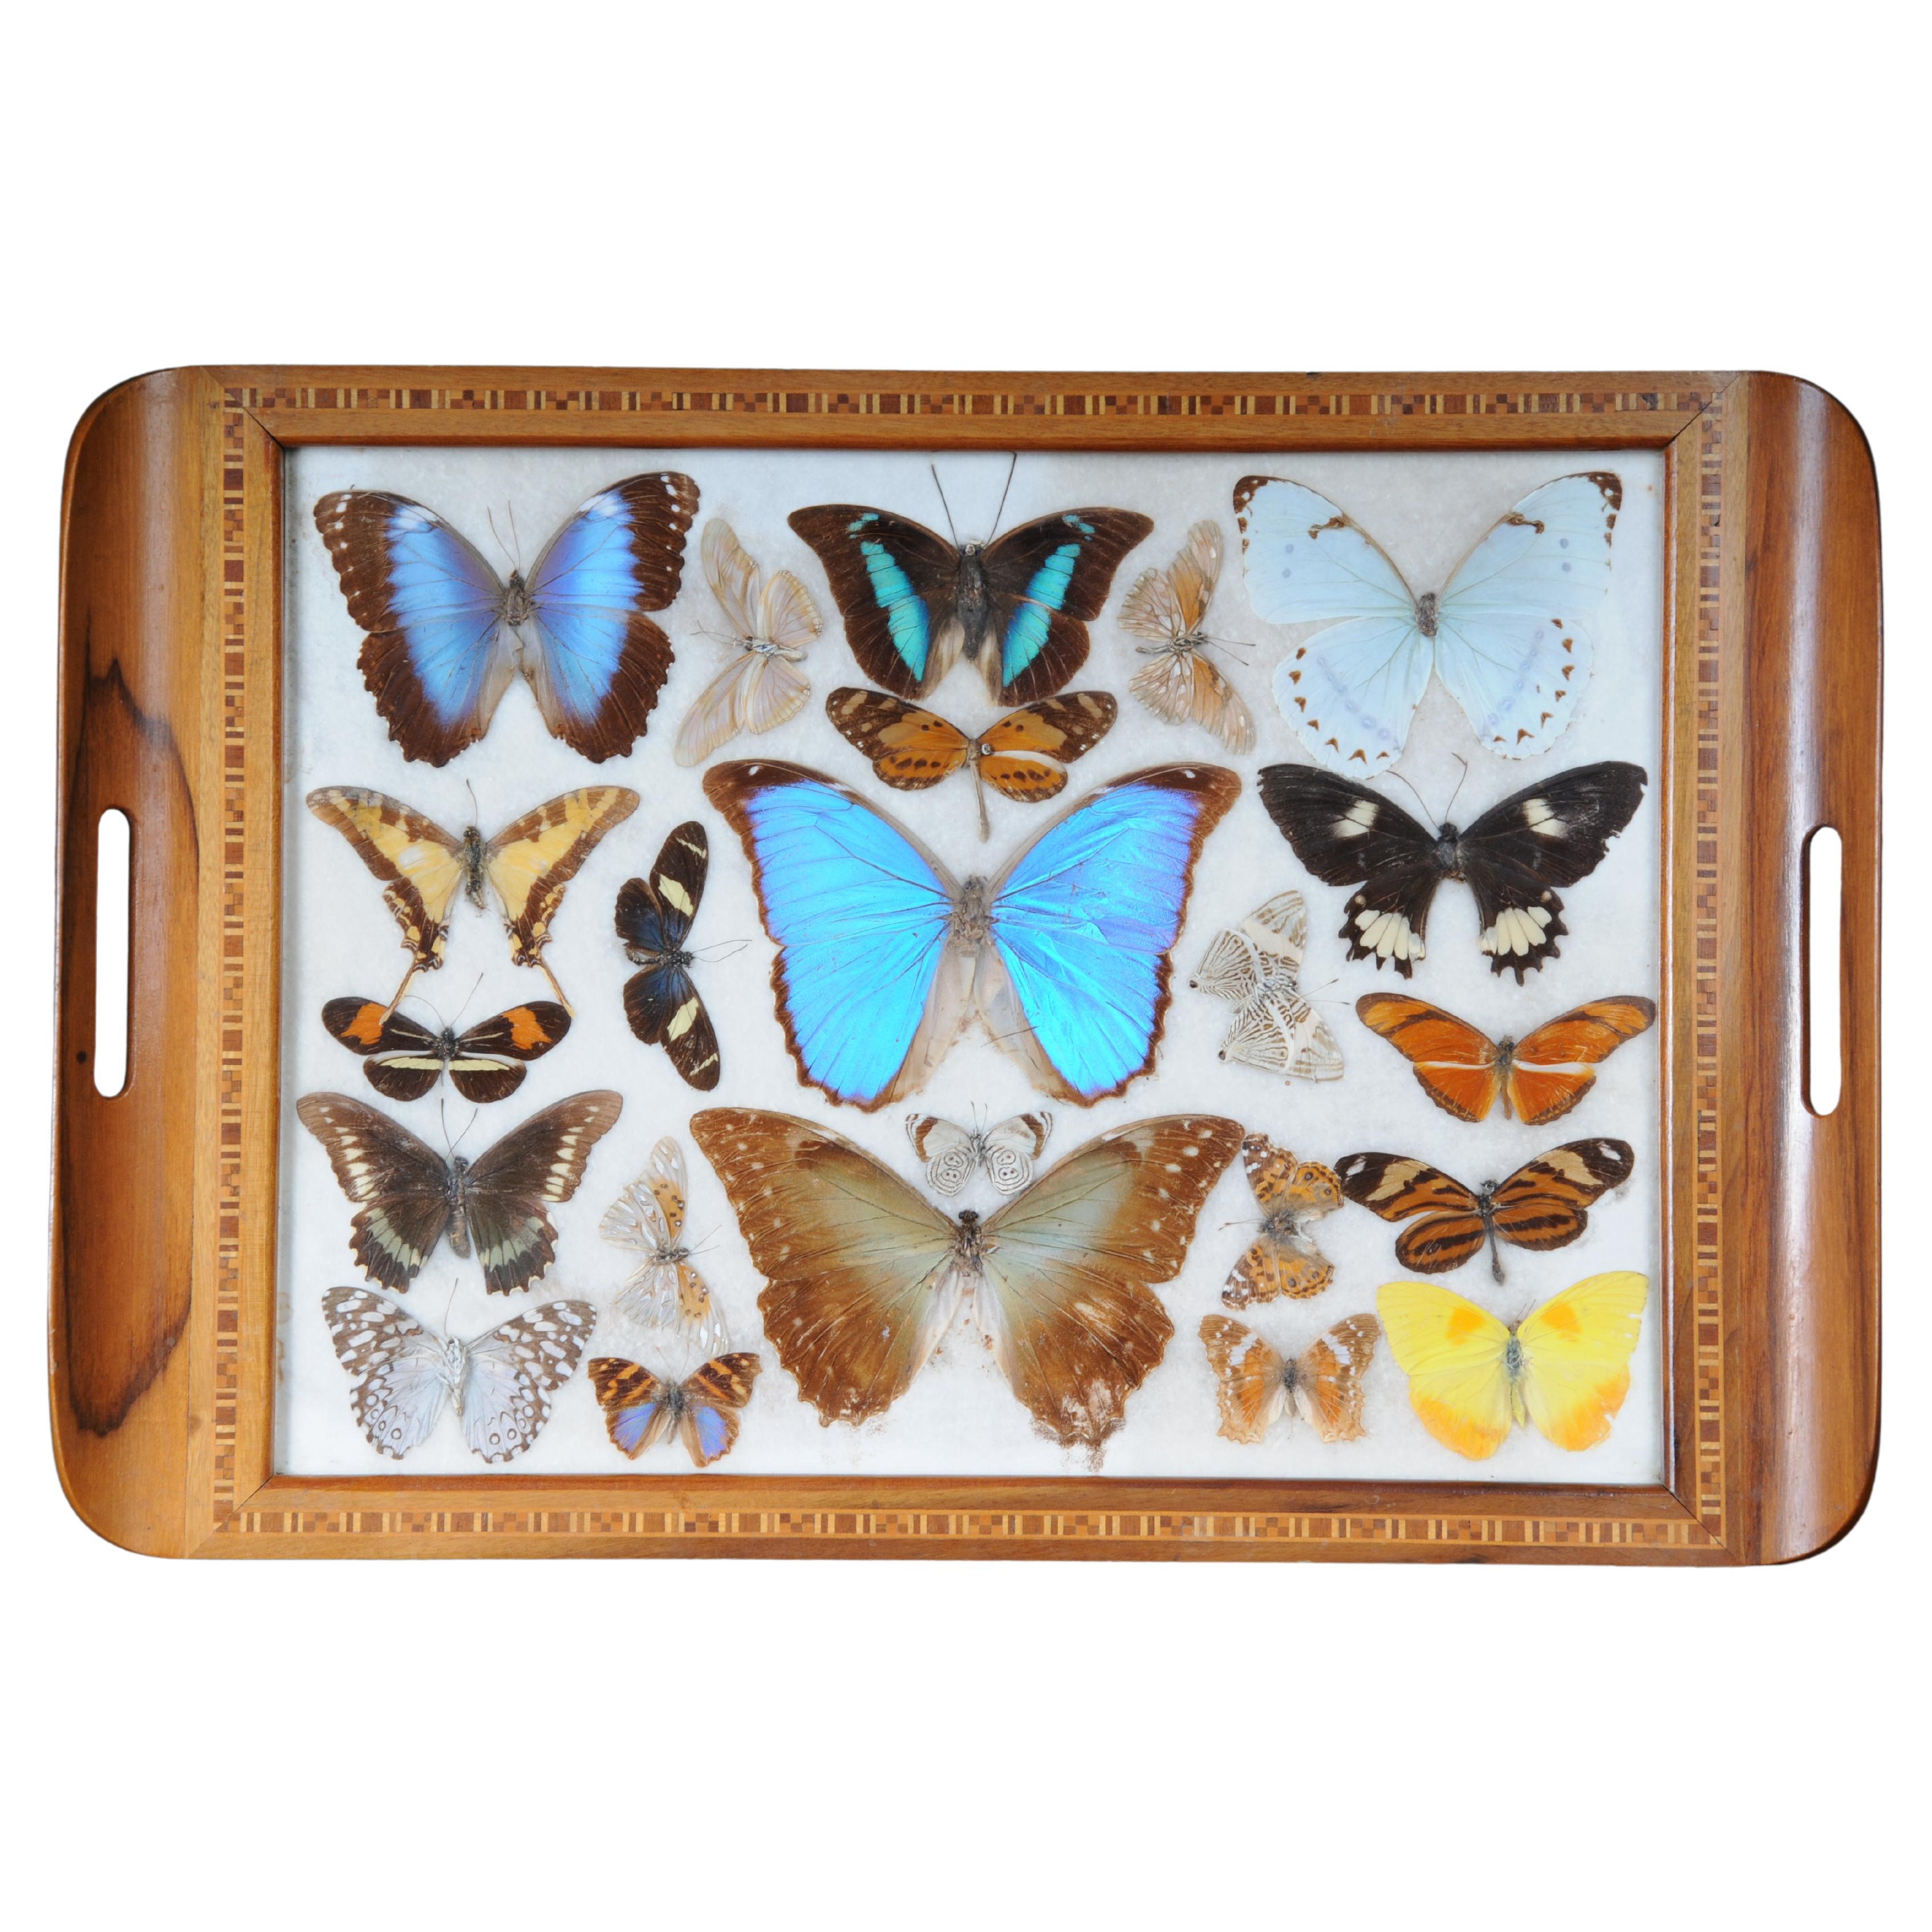 Curious Antikes Tablett mit echten Schmetterlingsexemplaren. Sehr selten